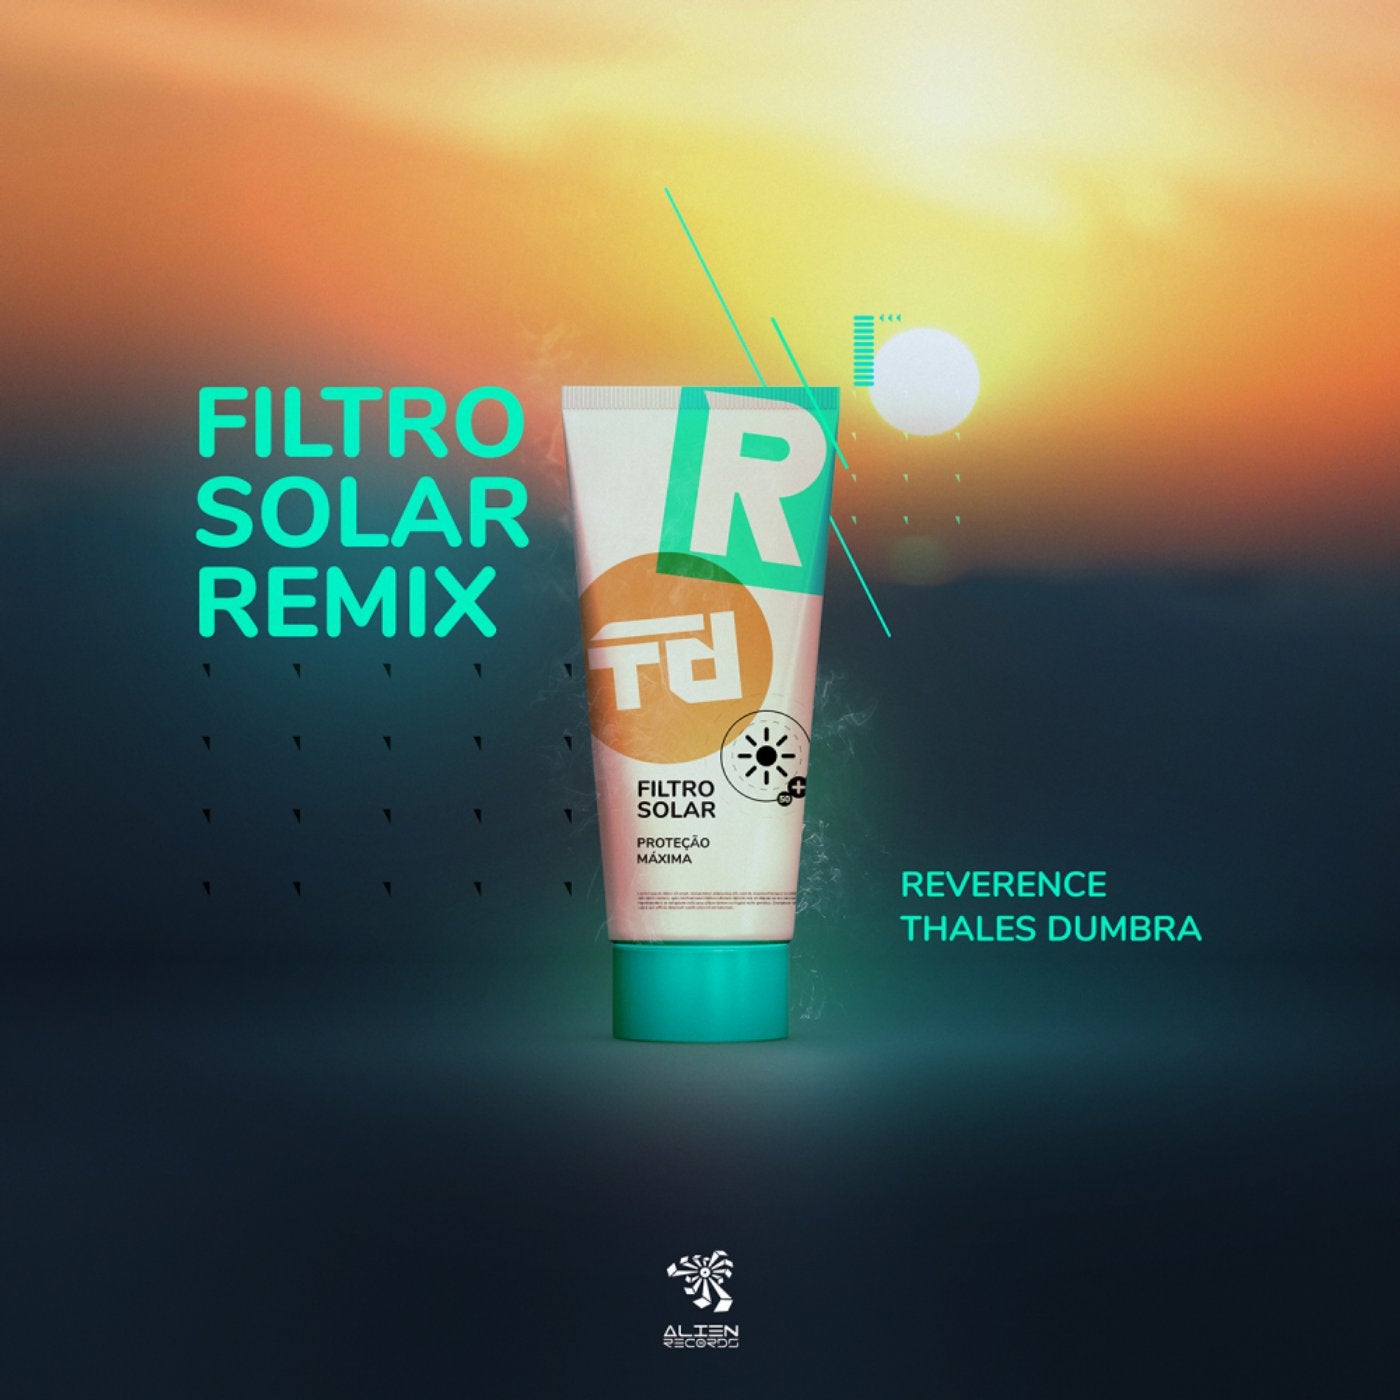 Filtro Solar (Thales Dumbra & Reverence Remix)